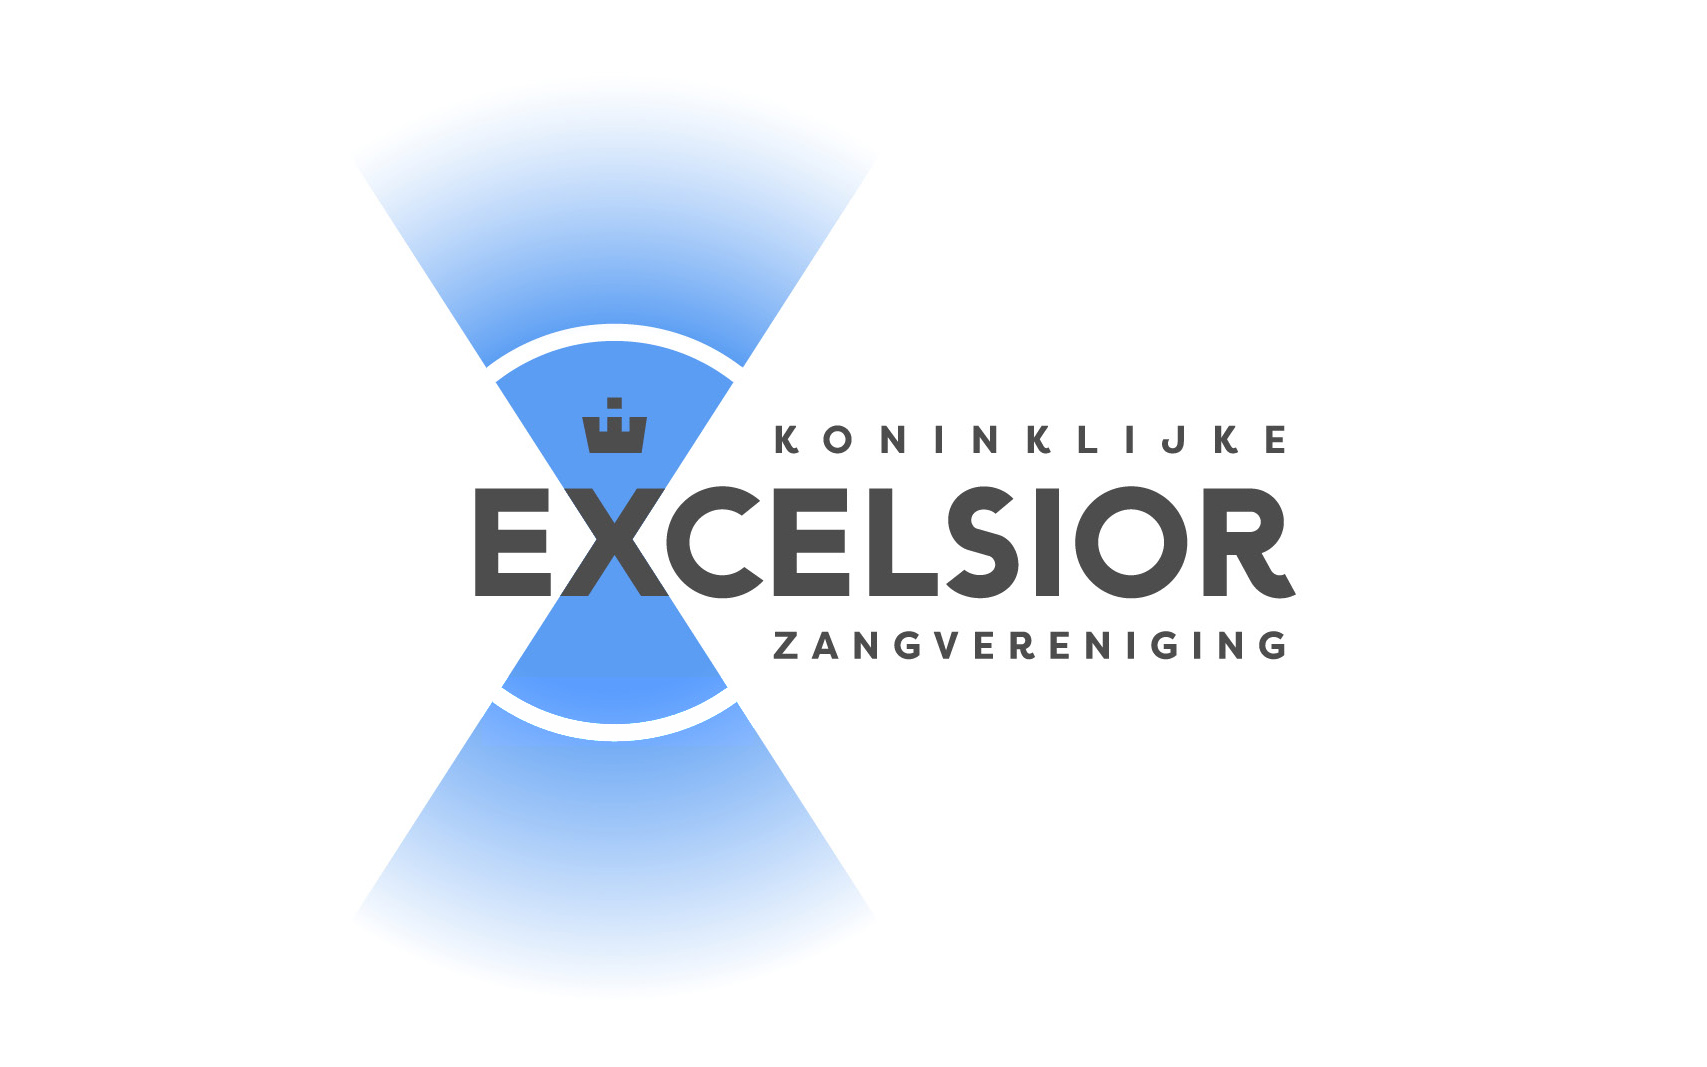 Koninklijke Zangvereniging Excelsior